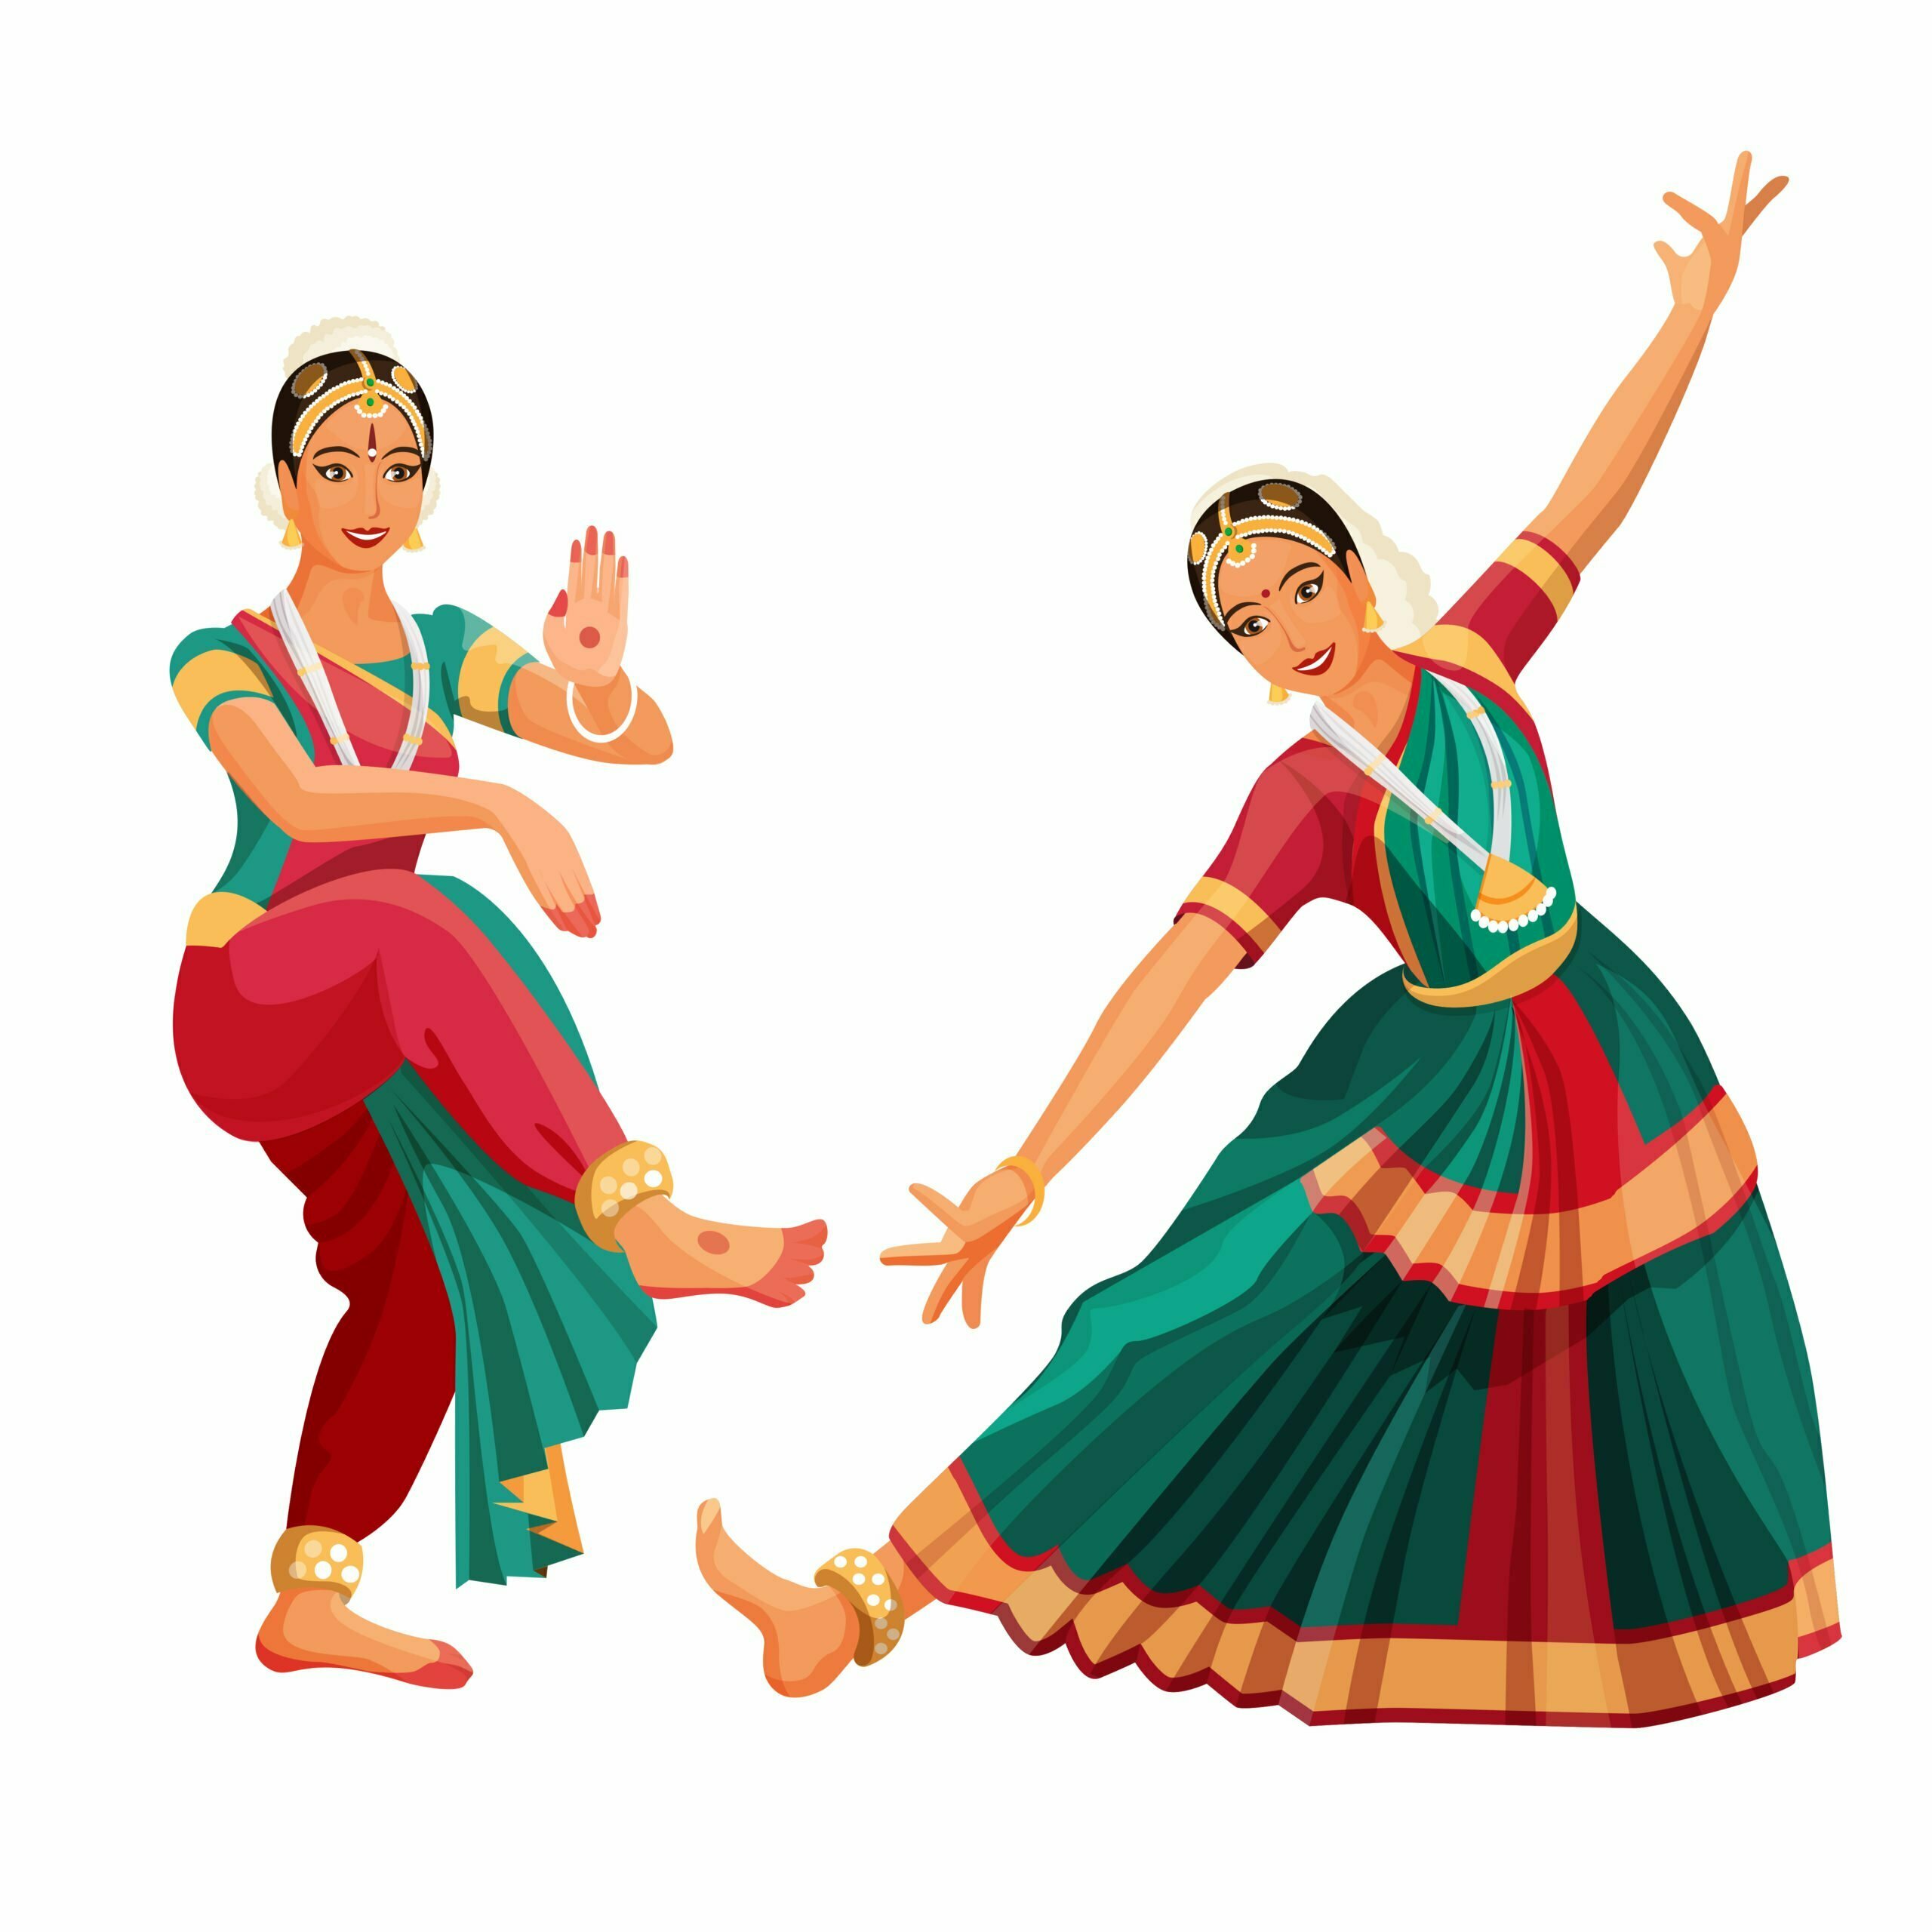 Simha's photography - Yama Dharmaraj….story of Markandeya…amazing  bharatnatyam recital by students Chithkala school of dance…  @shreema_upadhyaya @divthedancer @praveenkumardance #bharatanatyam # bharathanatyam #bharathanatiyam #dancer ...